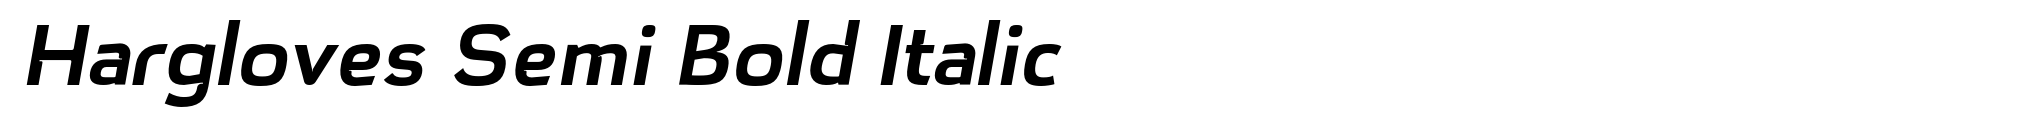 Hargloves Semi Bold Italic image